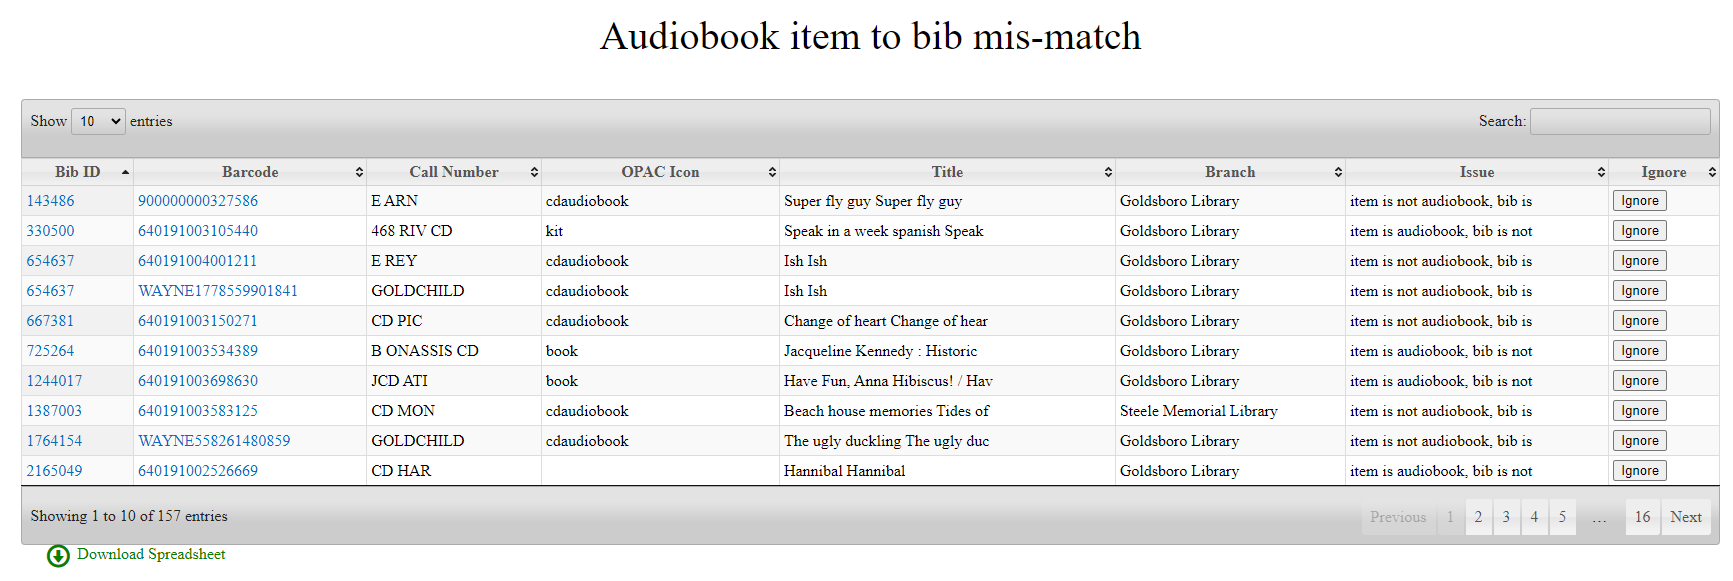 Example list of audiobook item to bib mis-matches